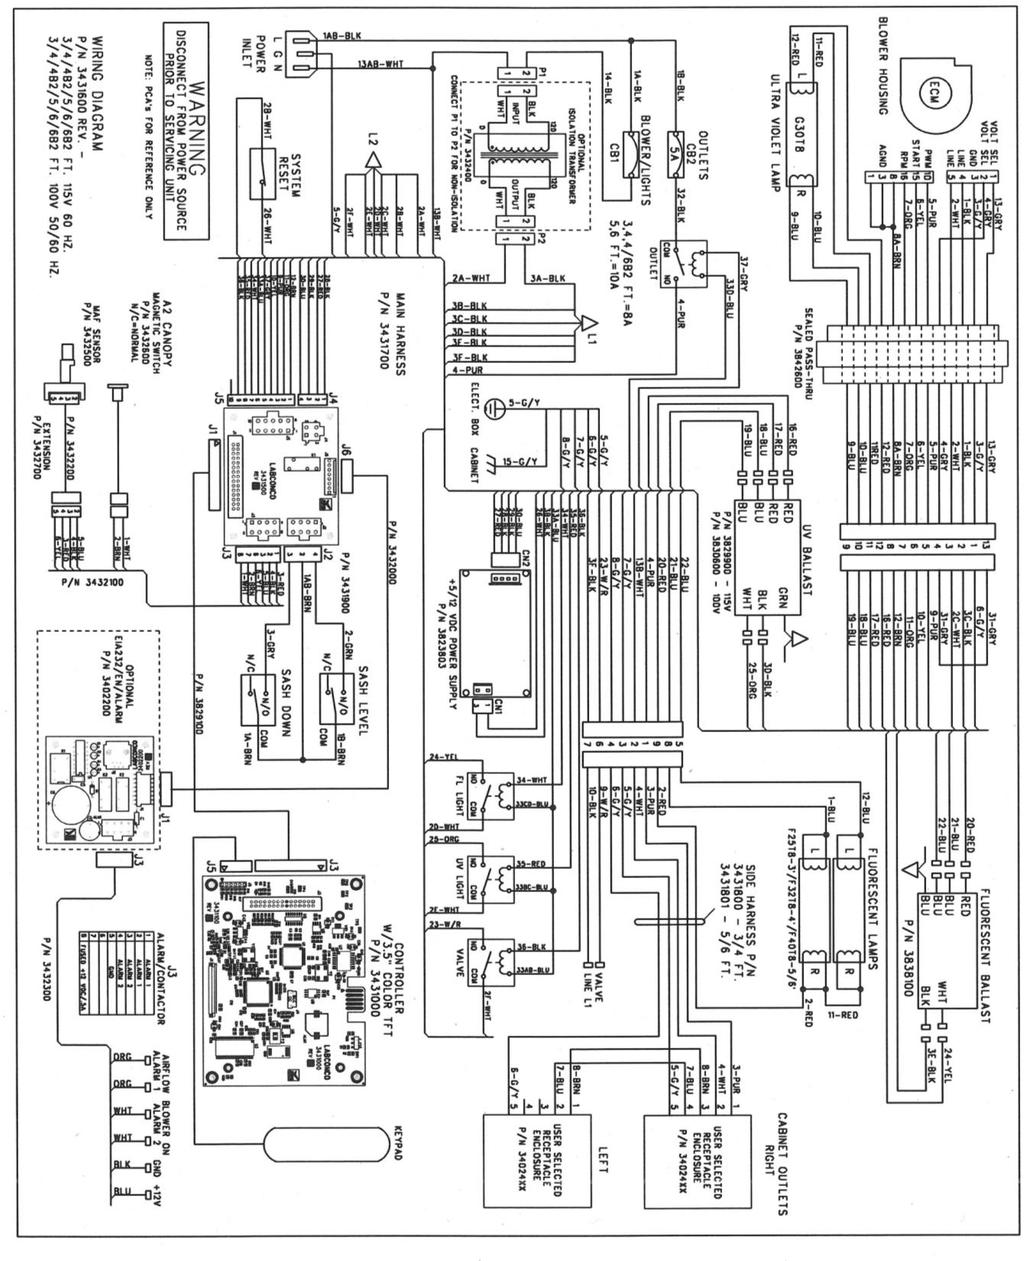 Wiring Diagrams -115 VAC Models